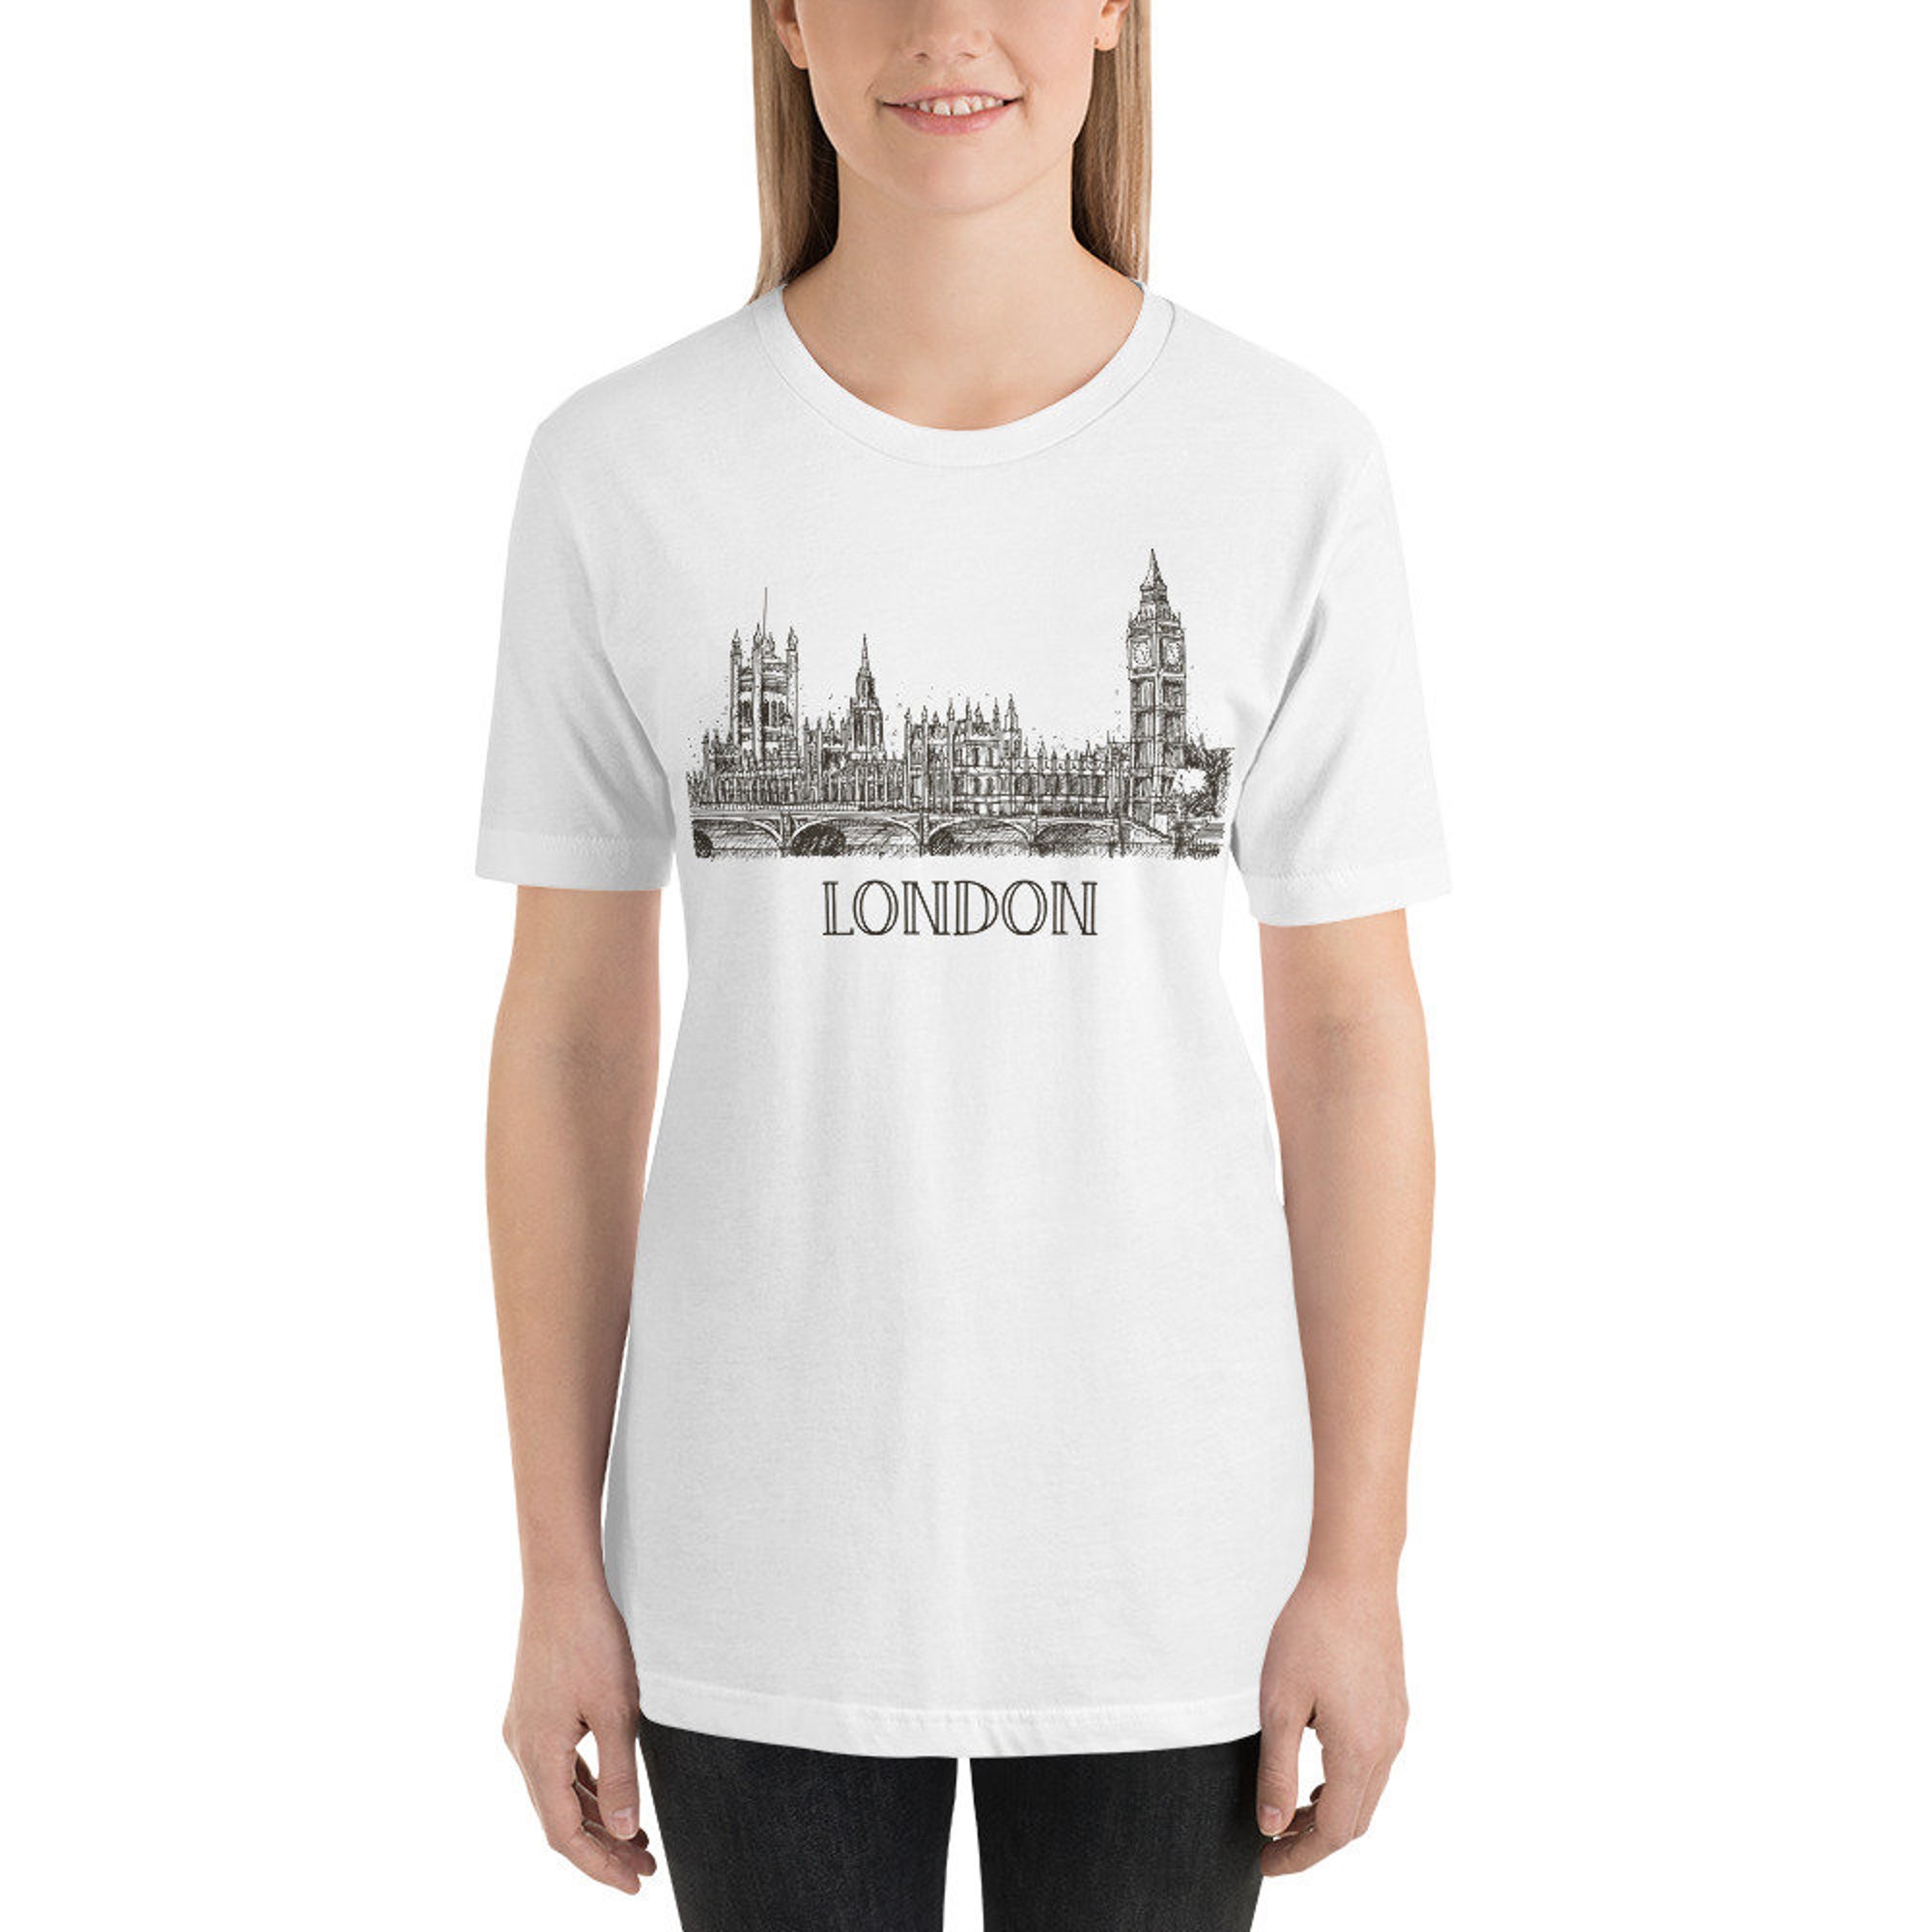 Discover London Shirt, London Souvenir, London Vacation, I Love London Shirt